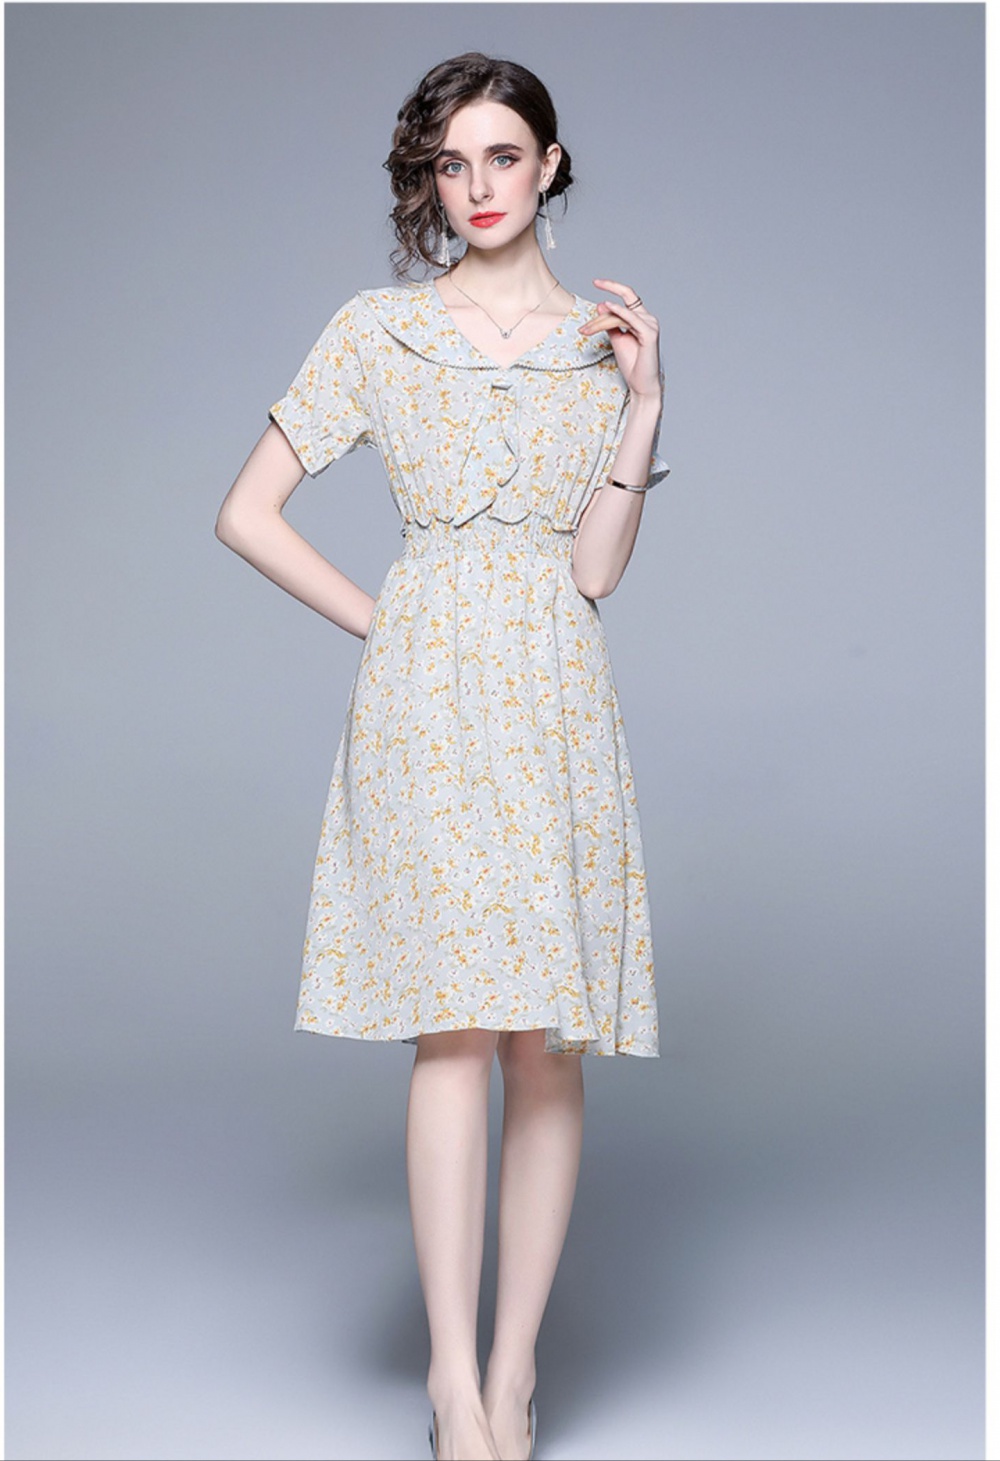 Temperament chiffon summer fashion floral dress for women